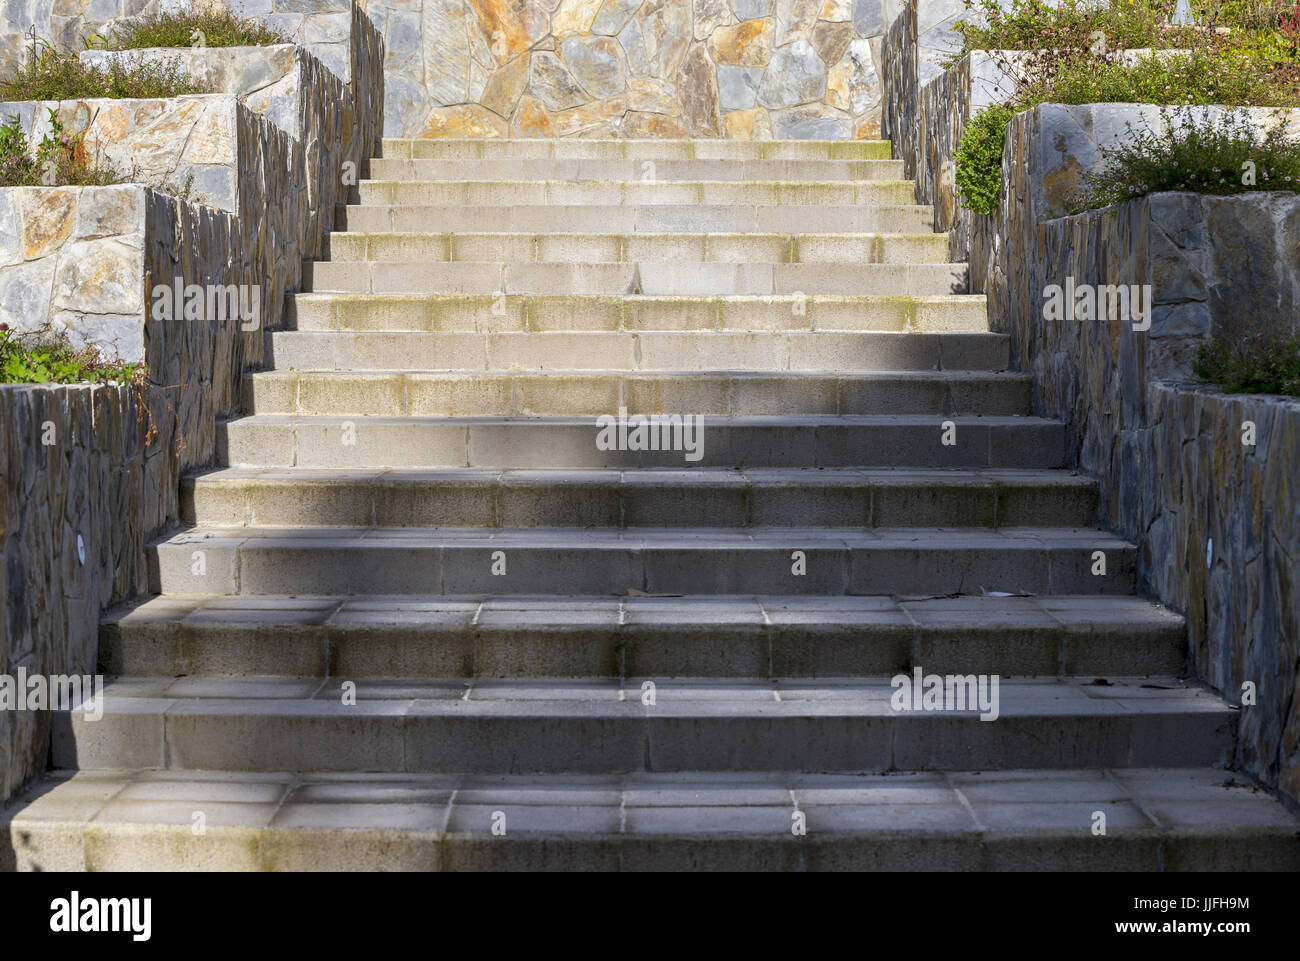 Escaleras / Stairs Stock Photo